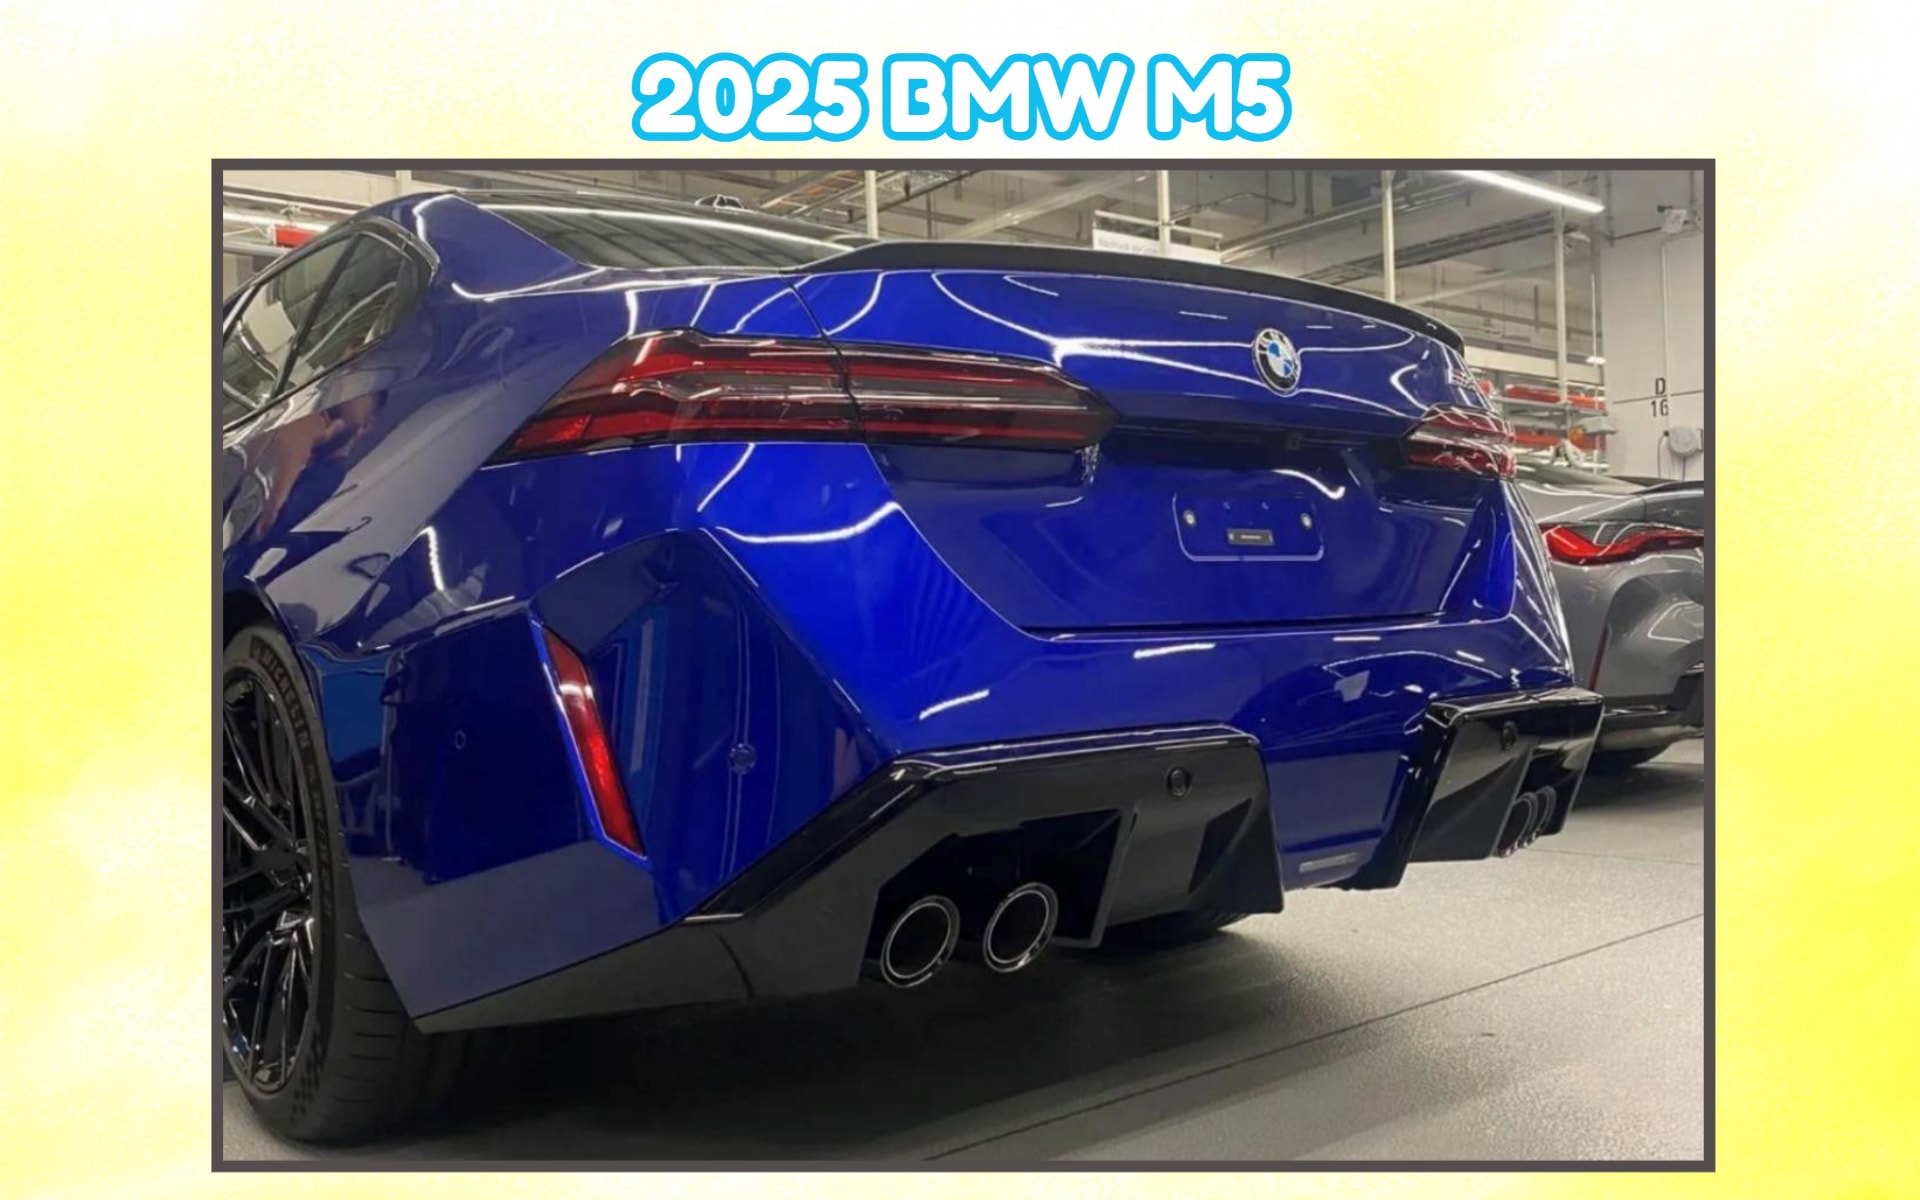 Best Bmw M5 In 2025